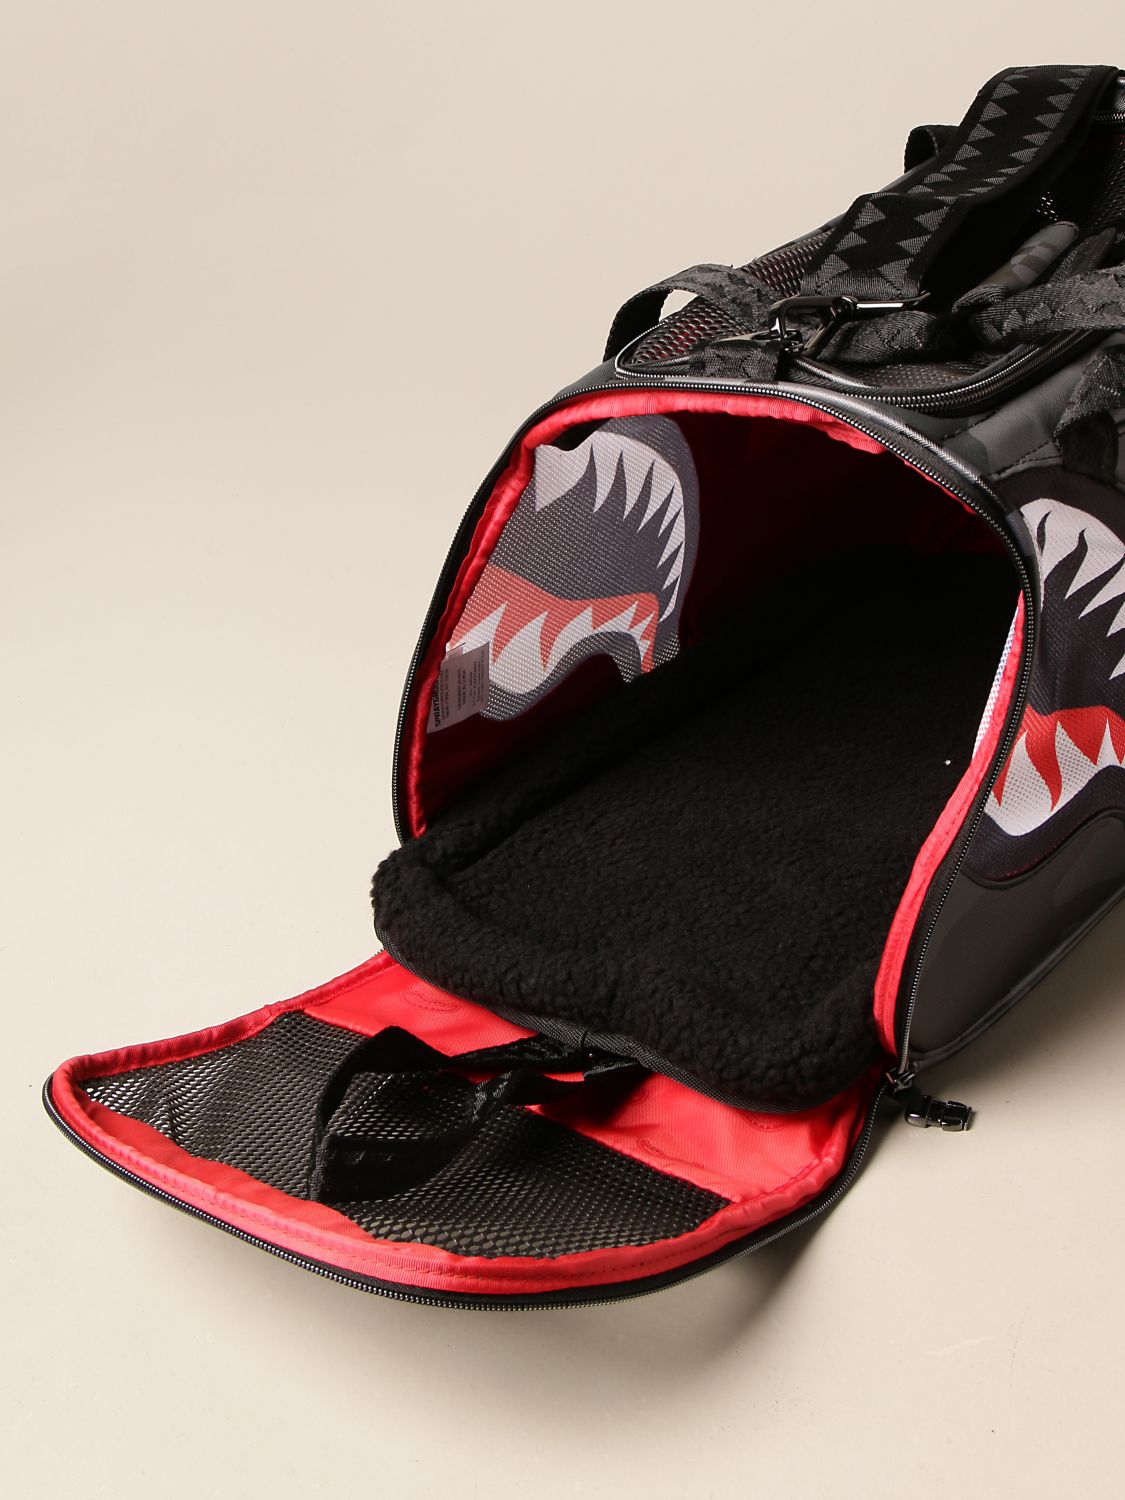 SPRAYGROUND: carrier in vegan leather with sharks print - Black